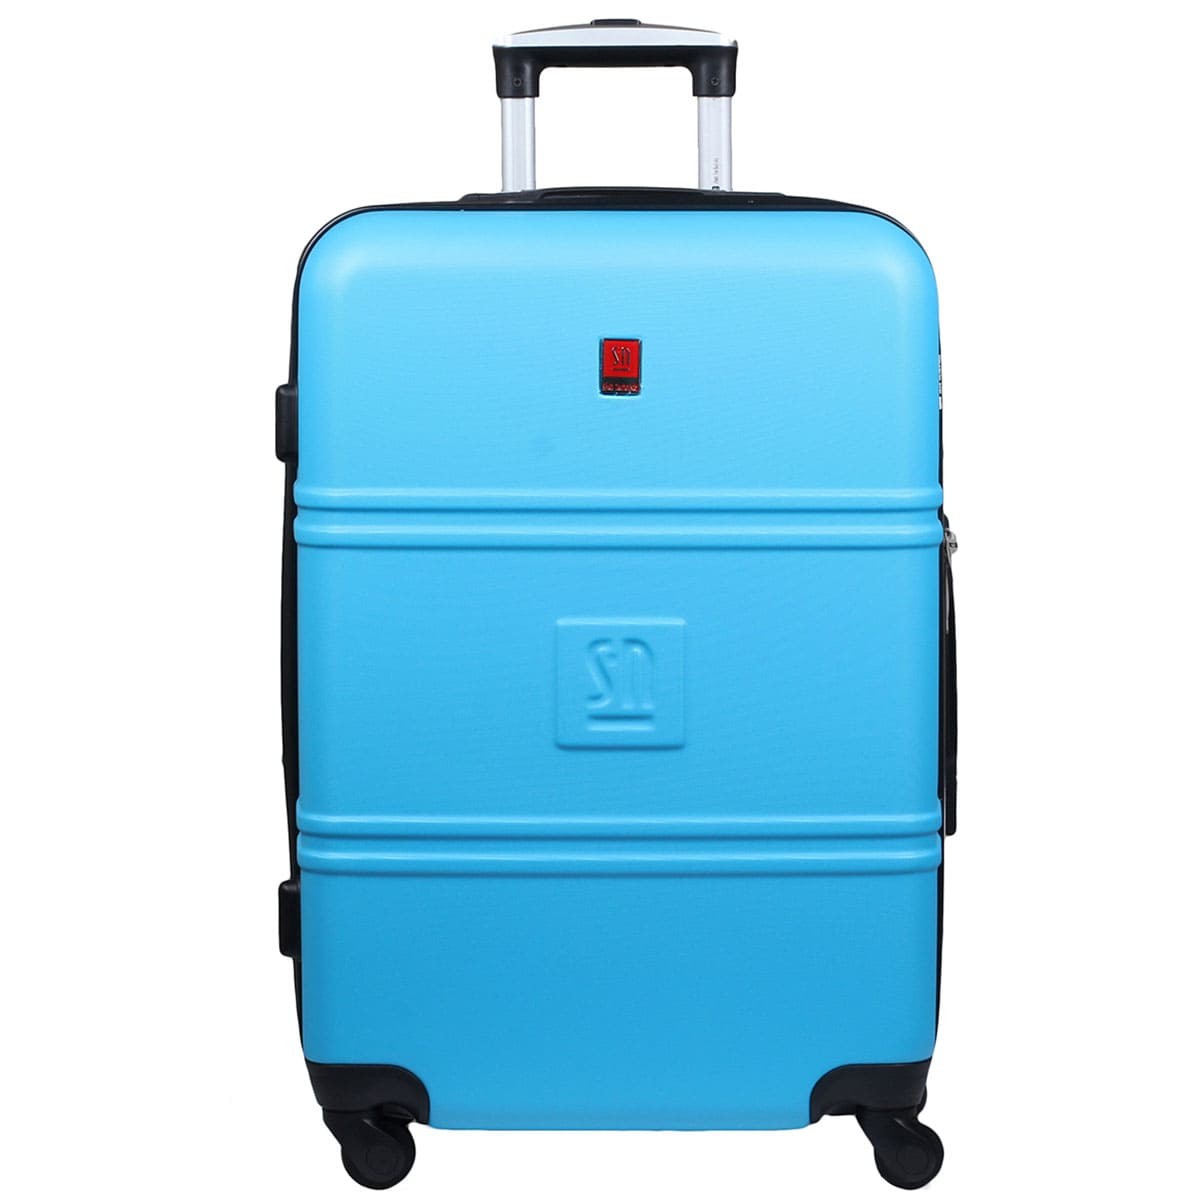 niebieska-walizka-podrozna-duza-na-kolkach-Art-Class-04-0411S-28.jpg